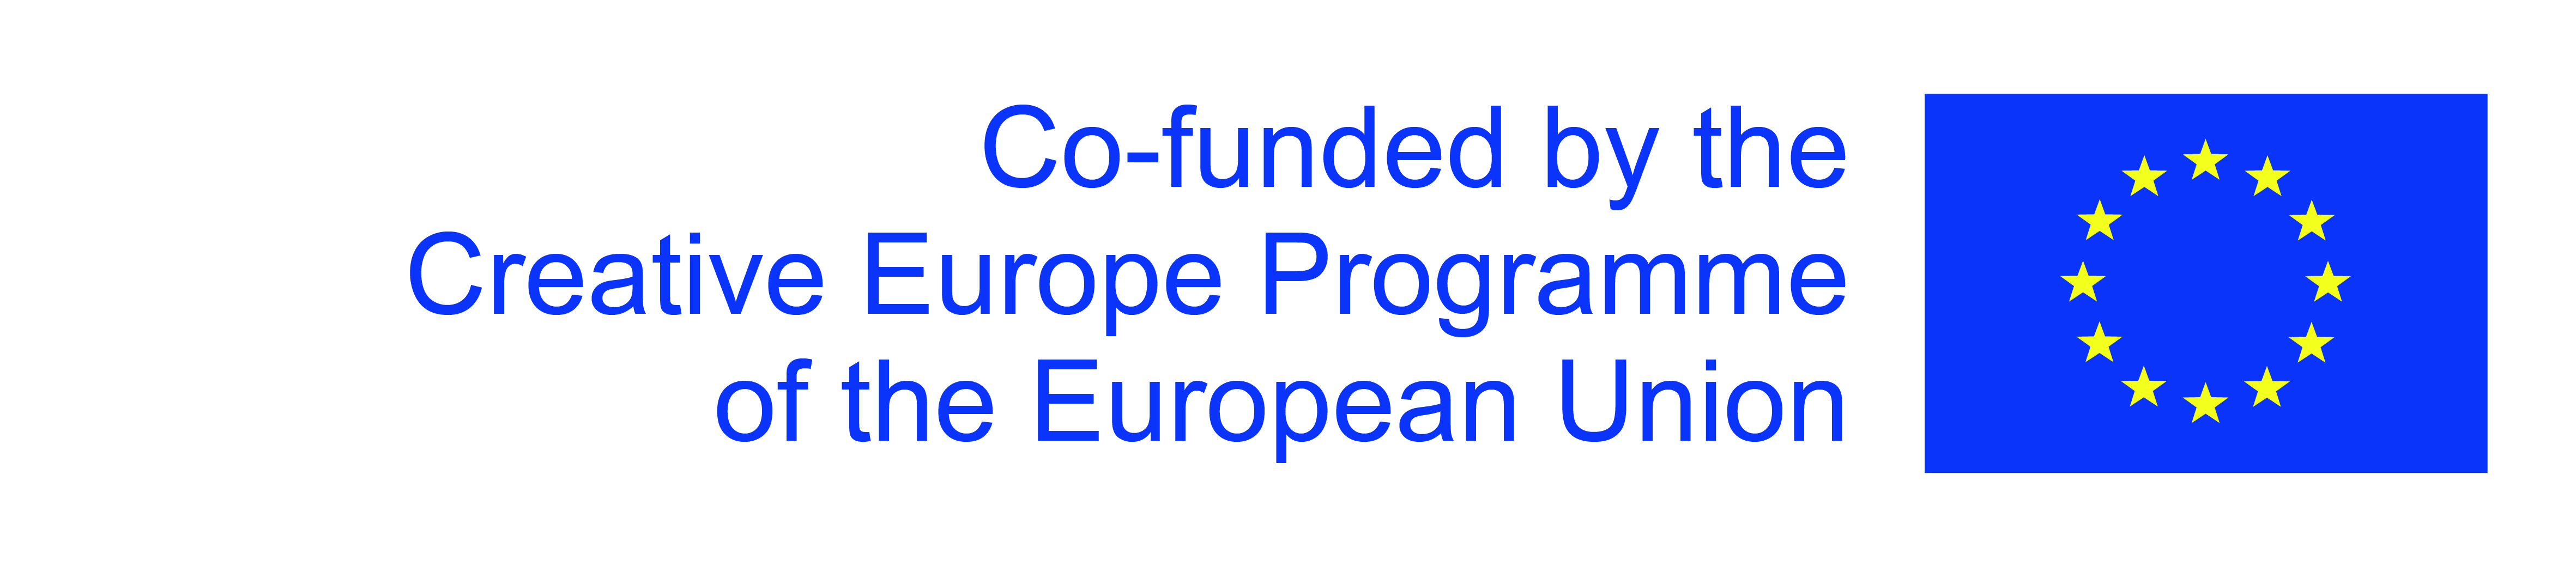 creative europe programme of the eu